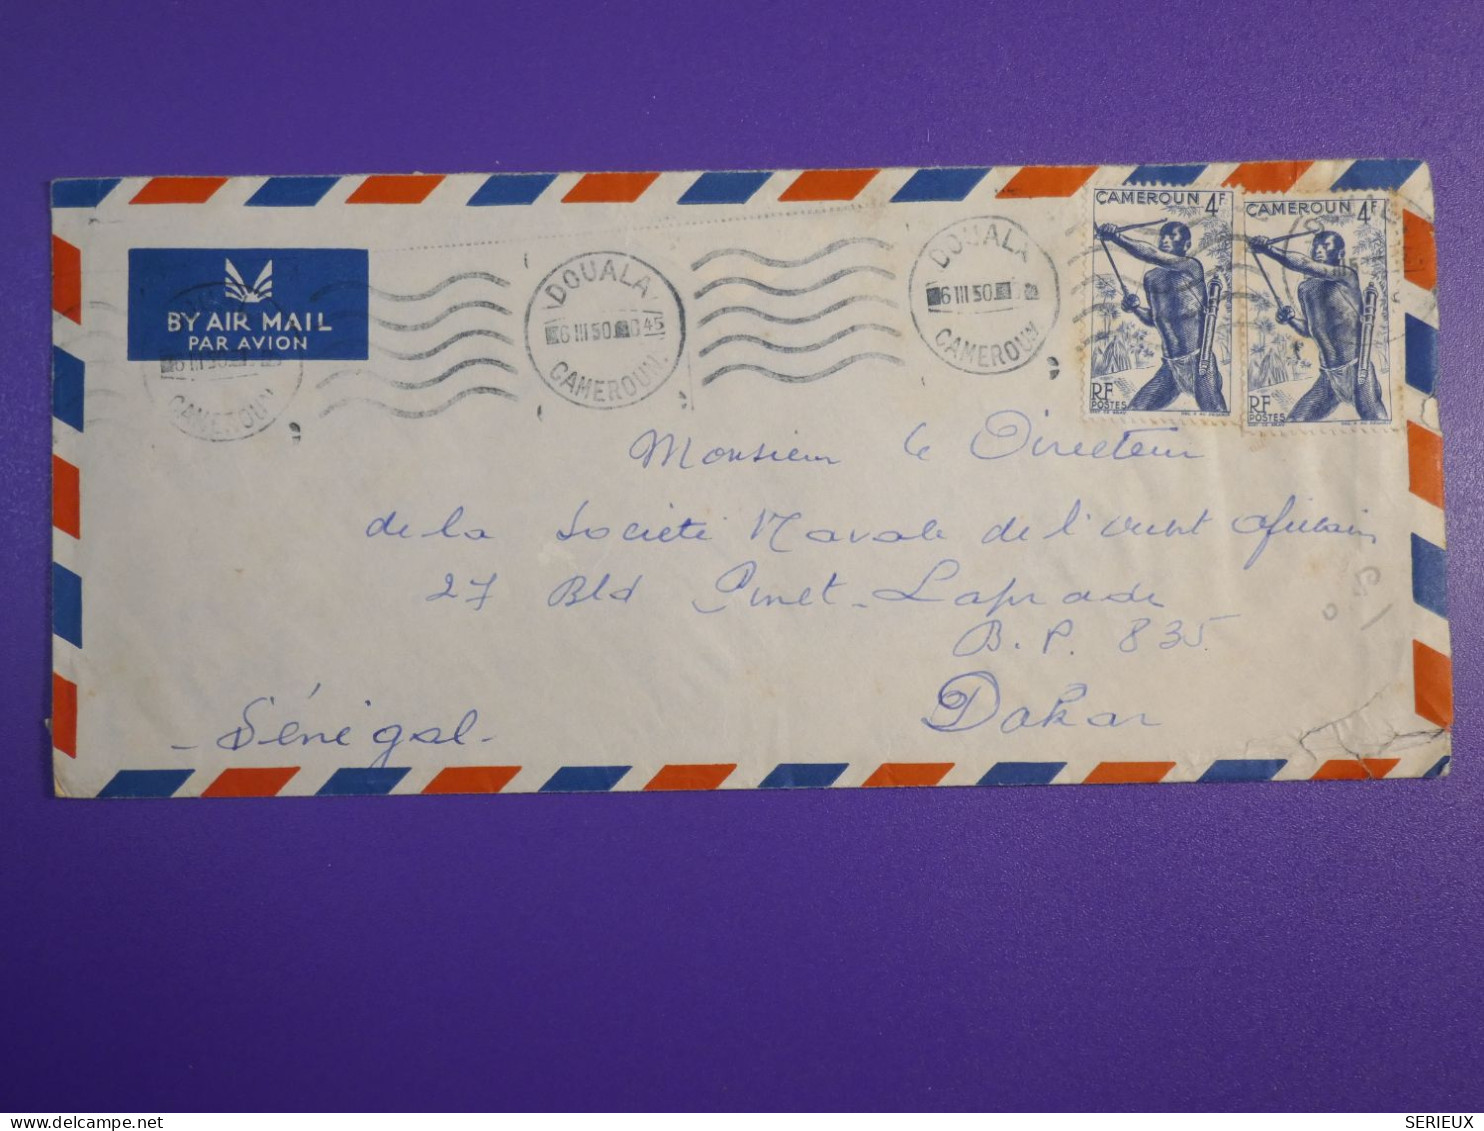 DL2  CAMEROUN  BELLE  LETTRE   1950  DOUALA  A  DAKAR   ++ ++ AFF. INTERESSANT+ - Storia Postale